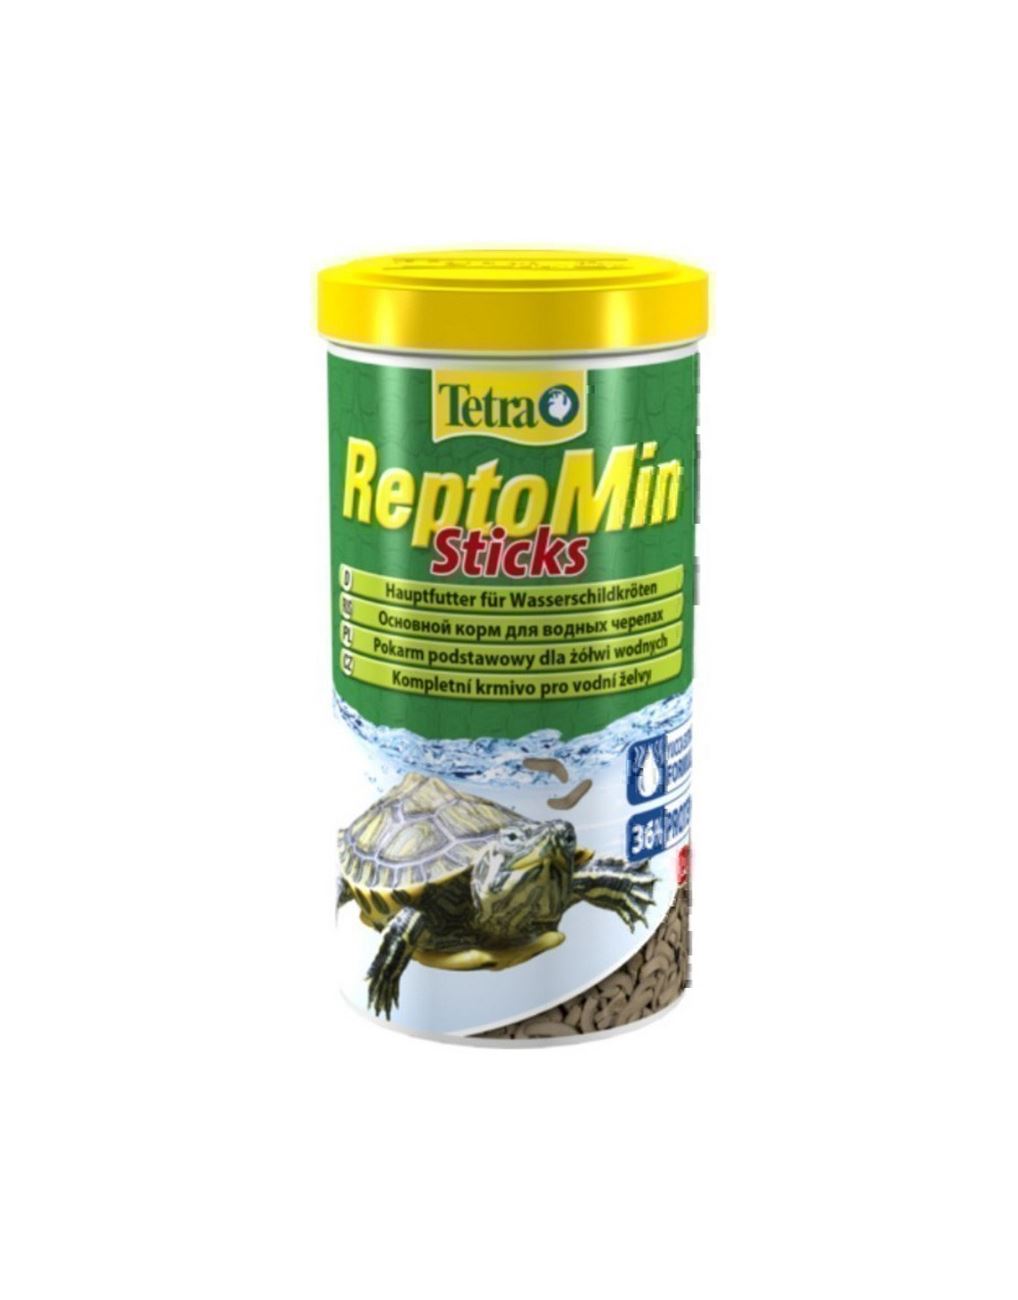 Tetra ReptoMin Sticks 100ml < Turtles